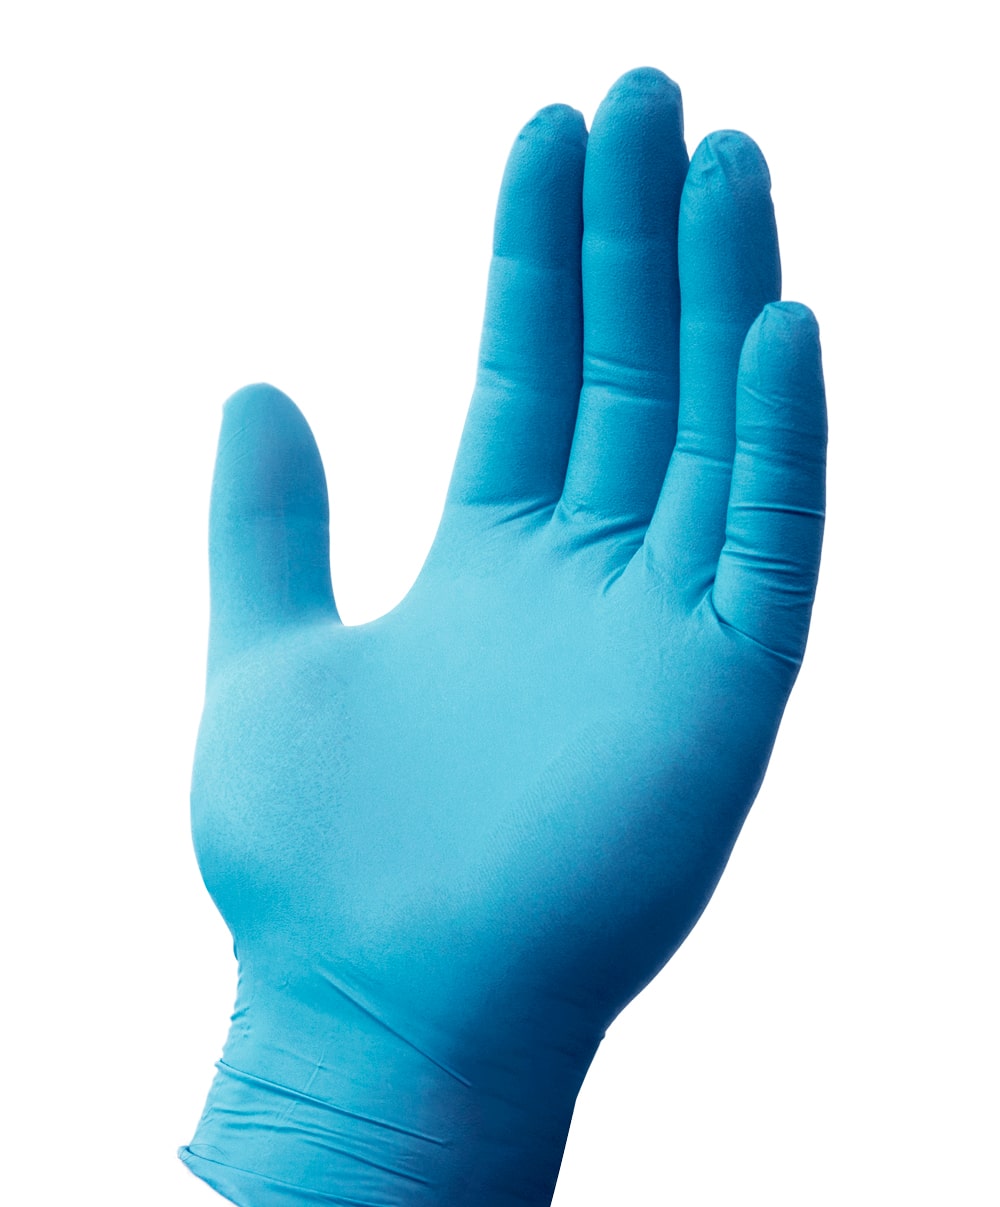 GNPR-MD-1A N2202 3Mil 
Light-Weight Blue Powder Free 
Nitrile Glove 100/Bx 10Bx/Cs